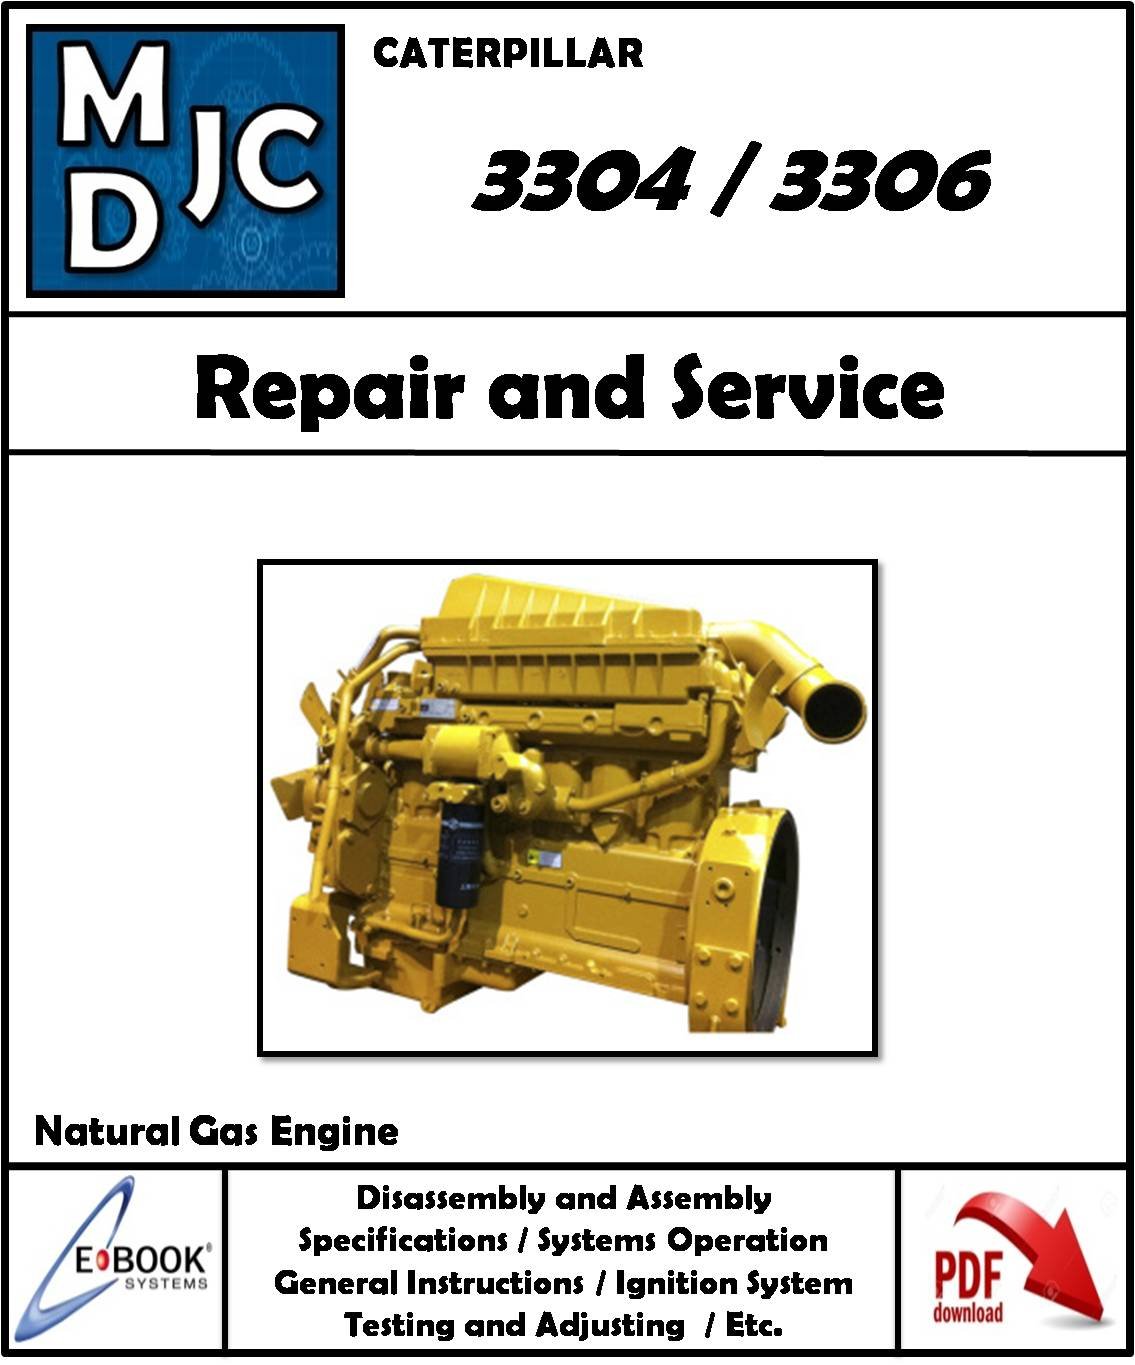 Manual de Taller Motor Caterpillar 3304 / 3306